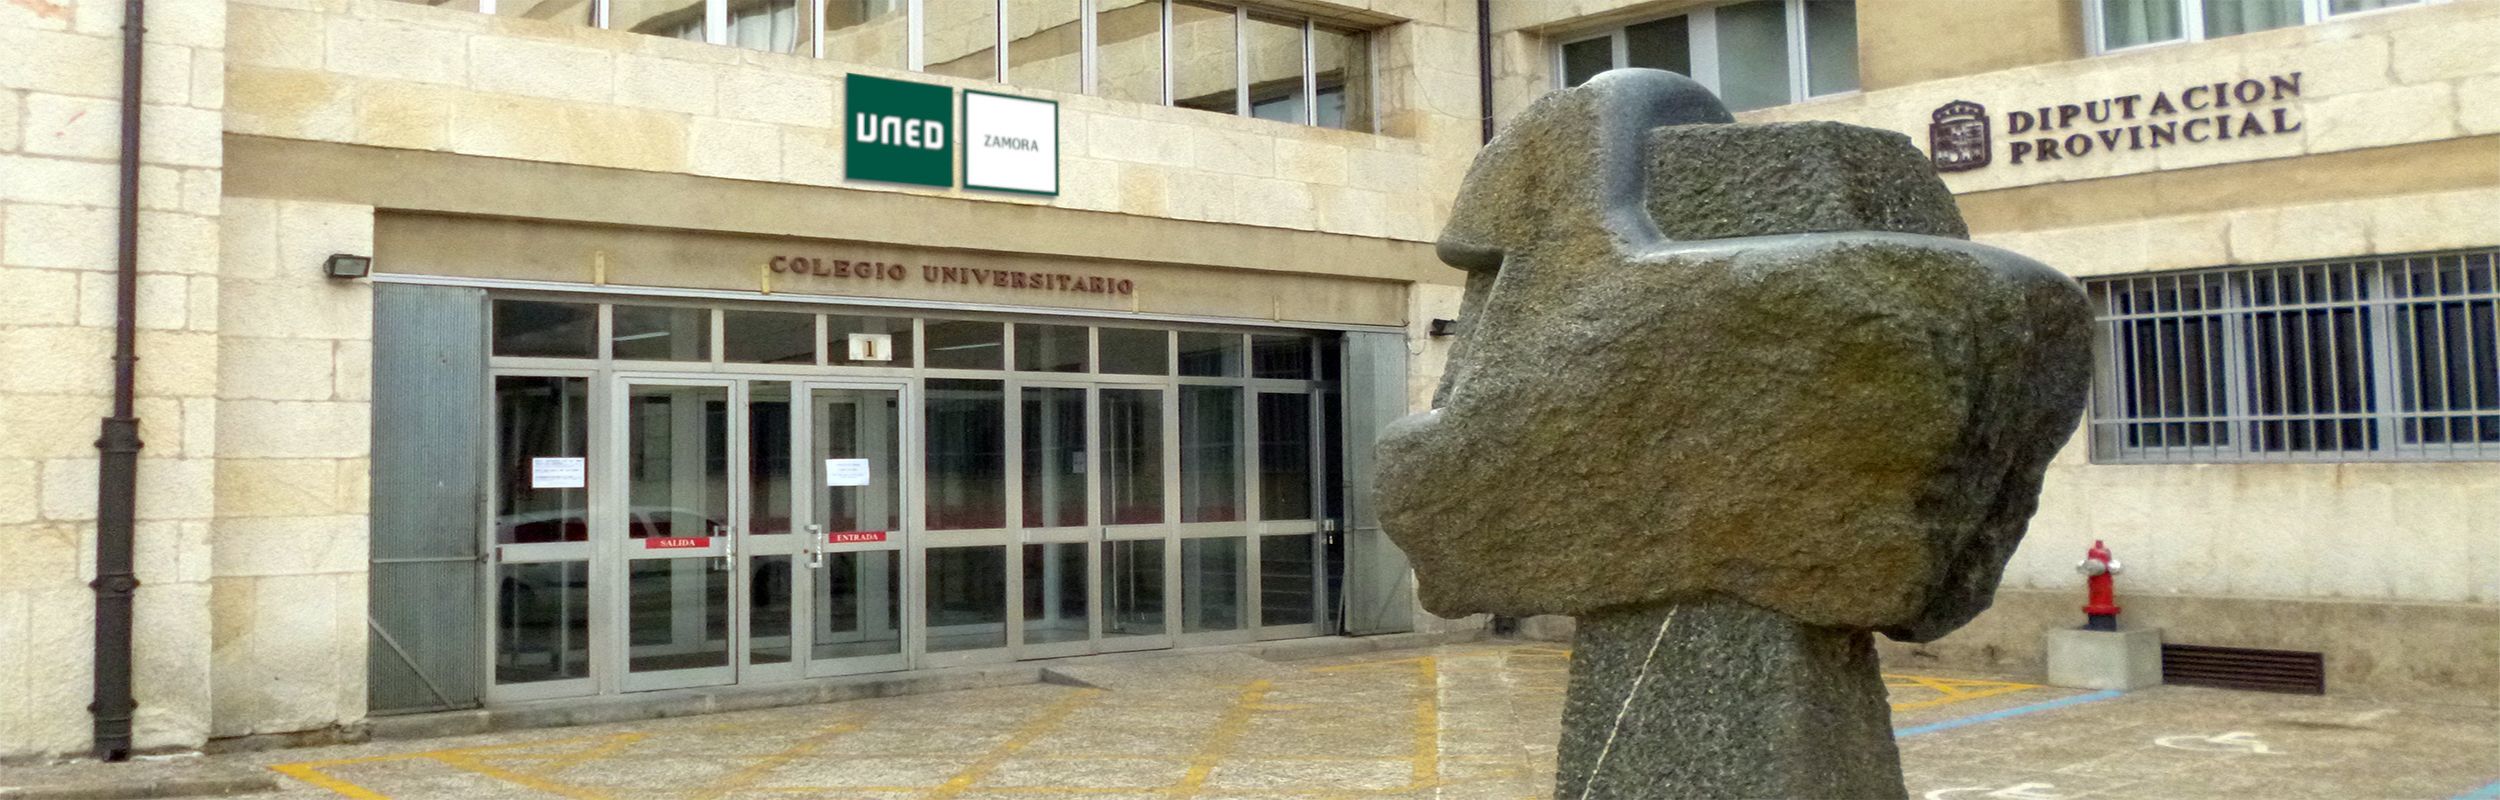 Edificio Colegio Universitario UNED Zamora